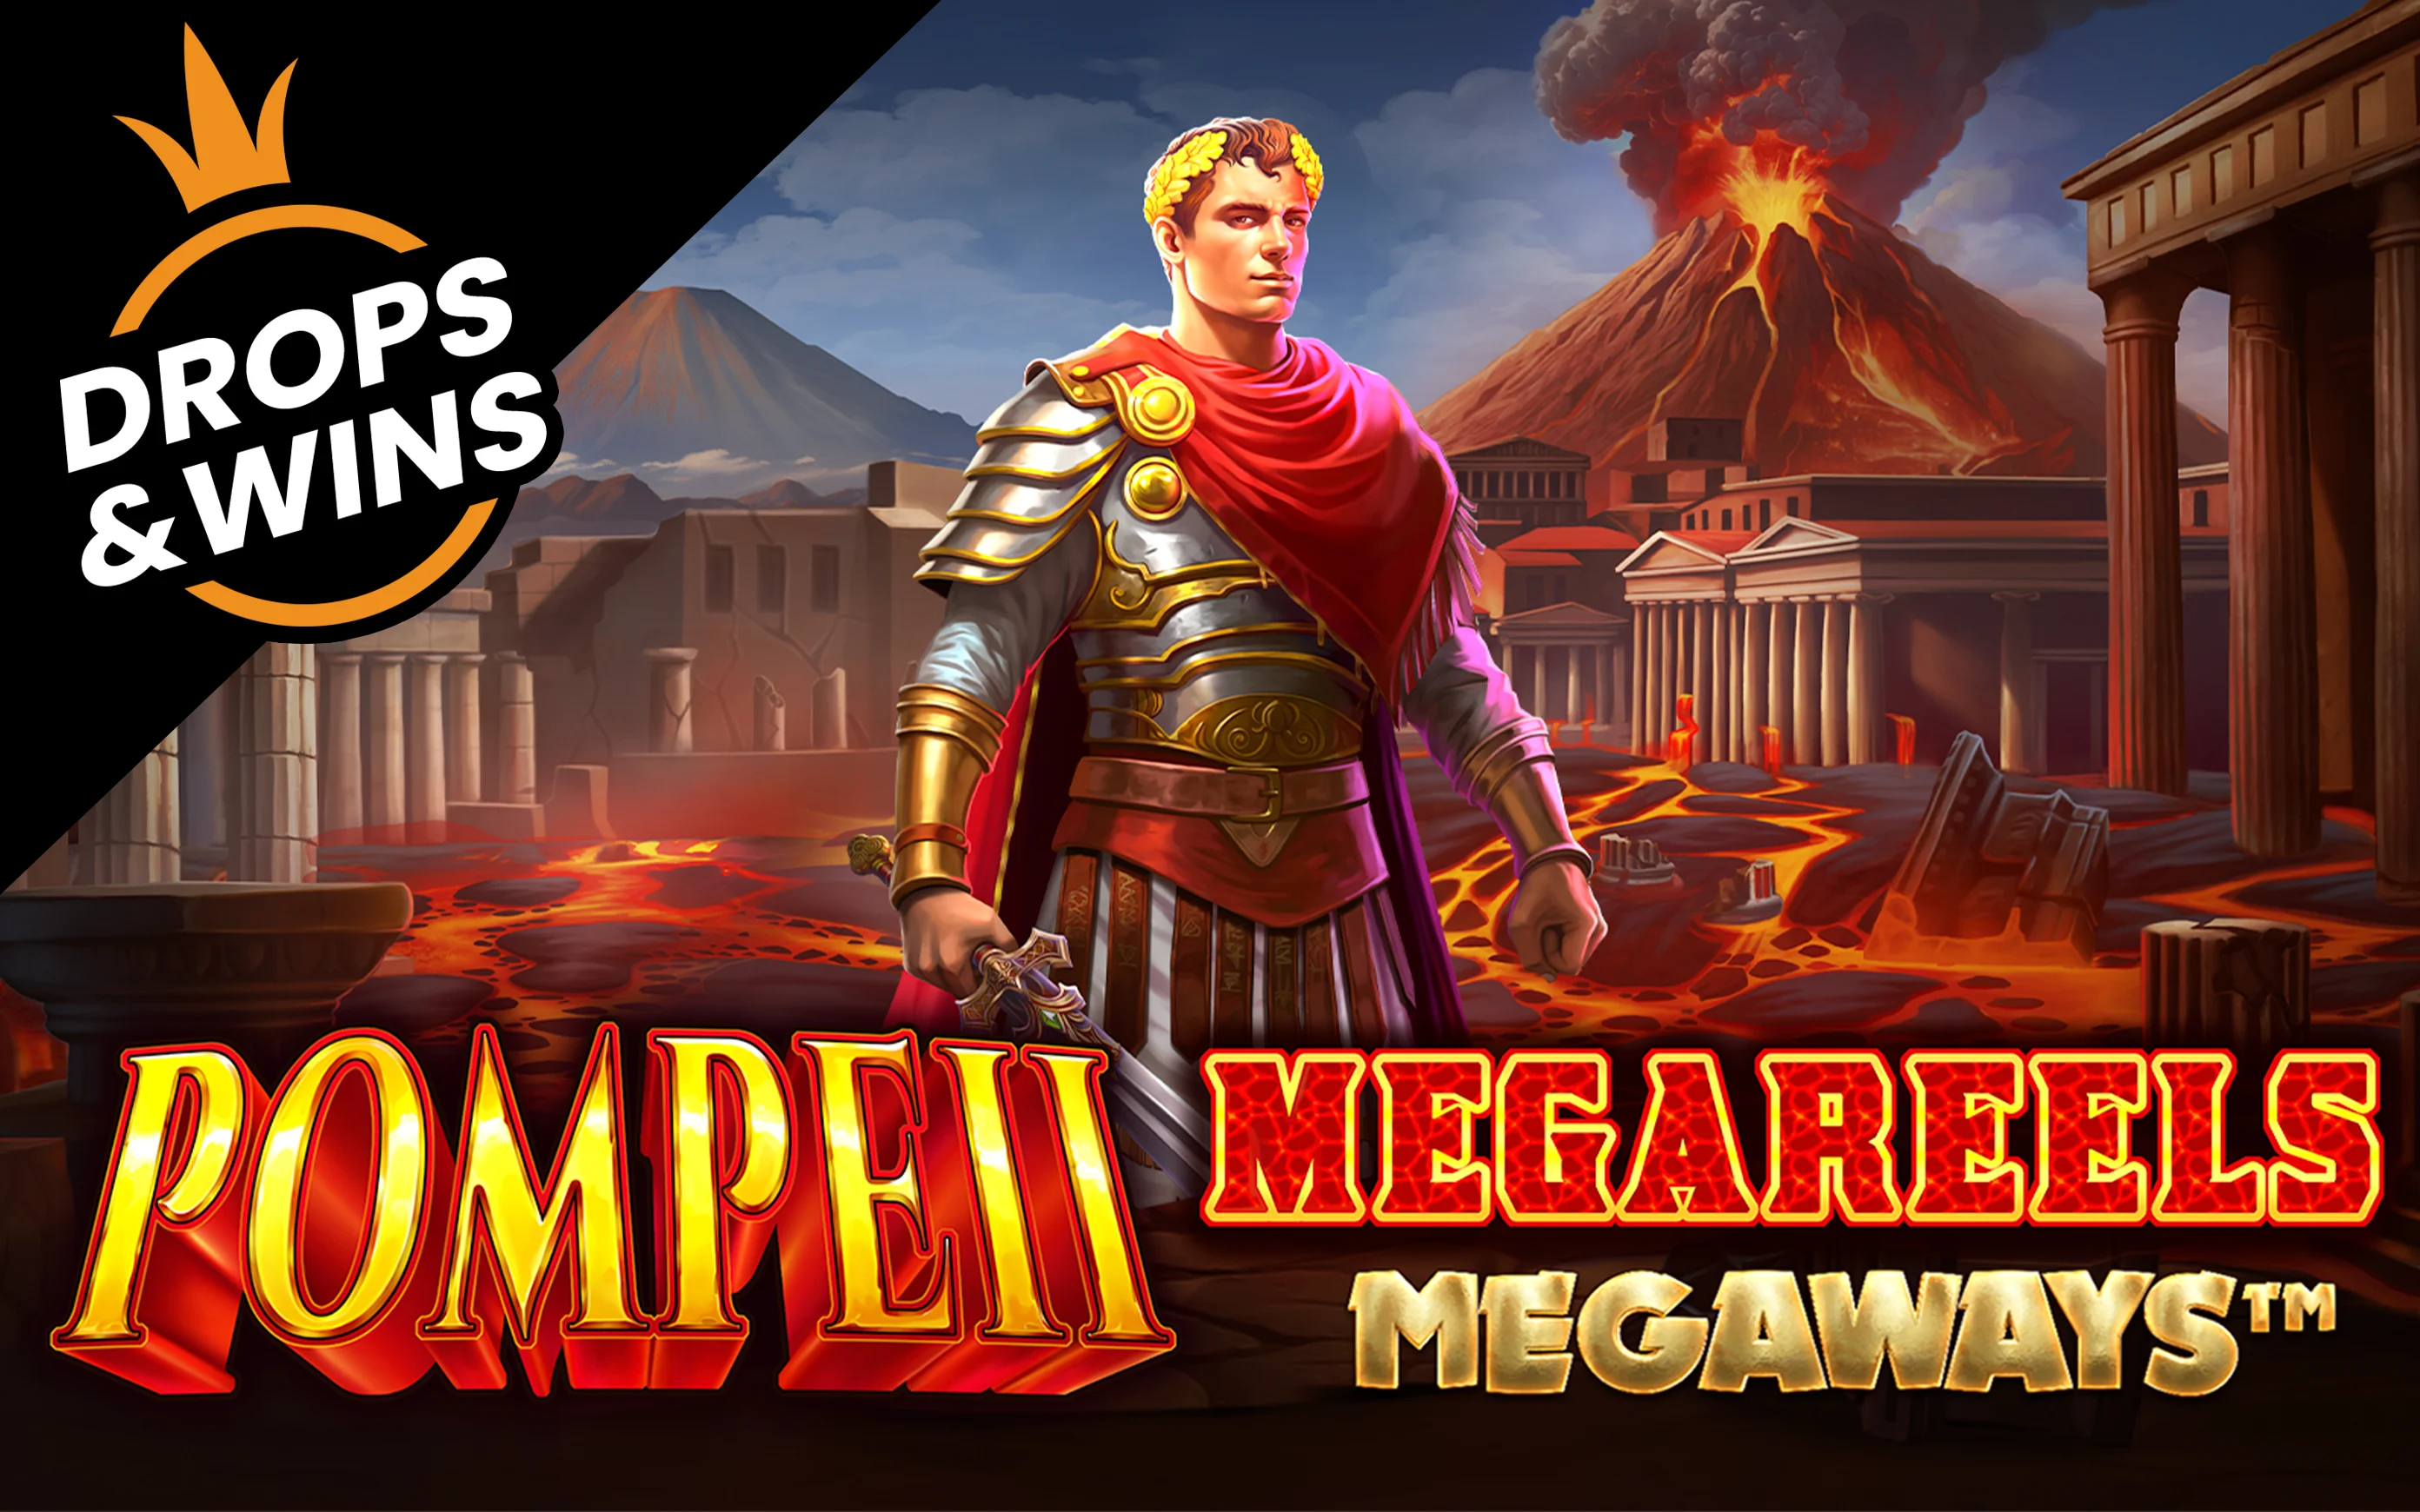 Joacă Pompeii Megareels Megaways™ în cazinoul online Starcasino.be